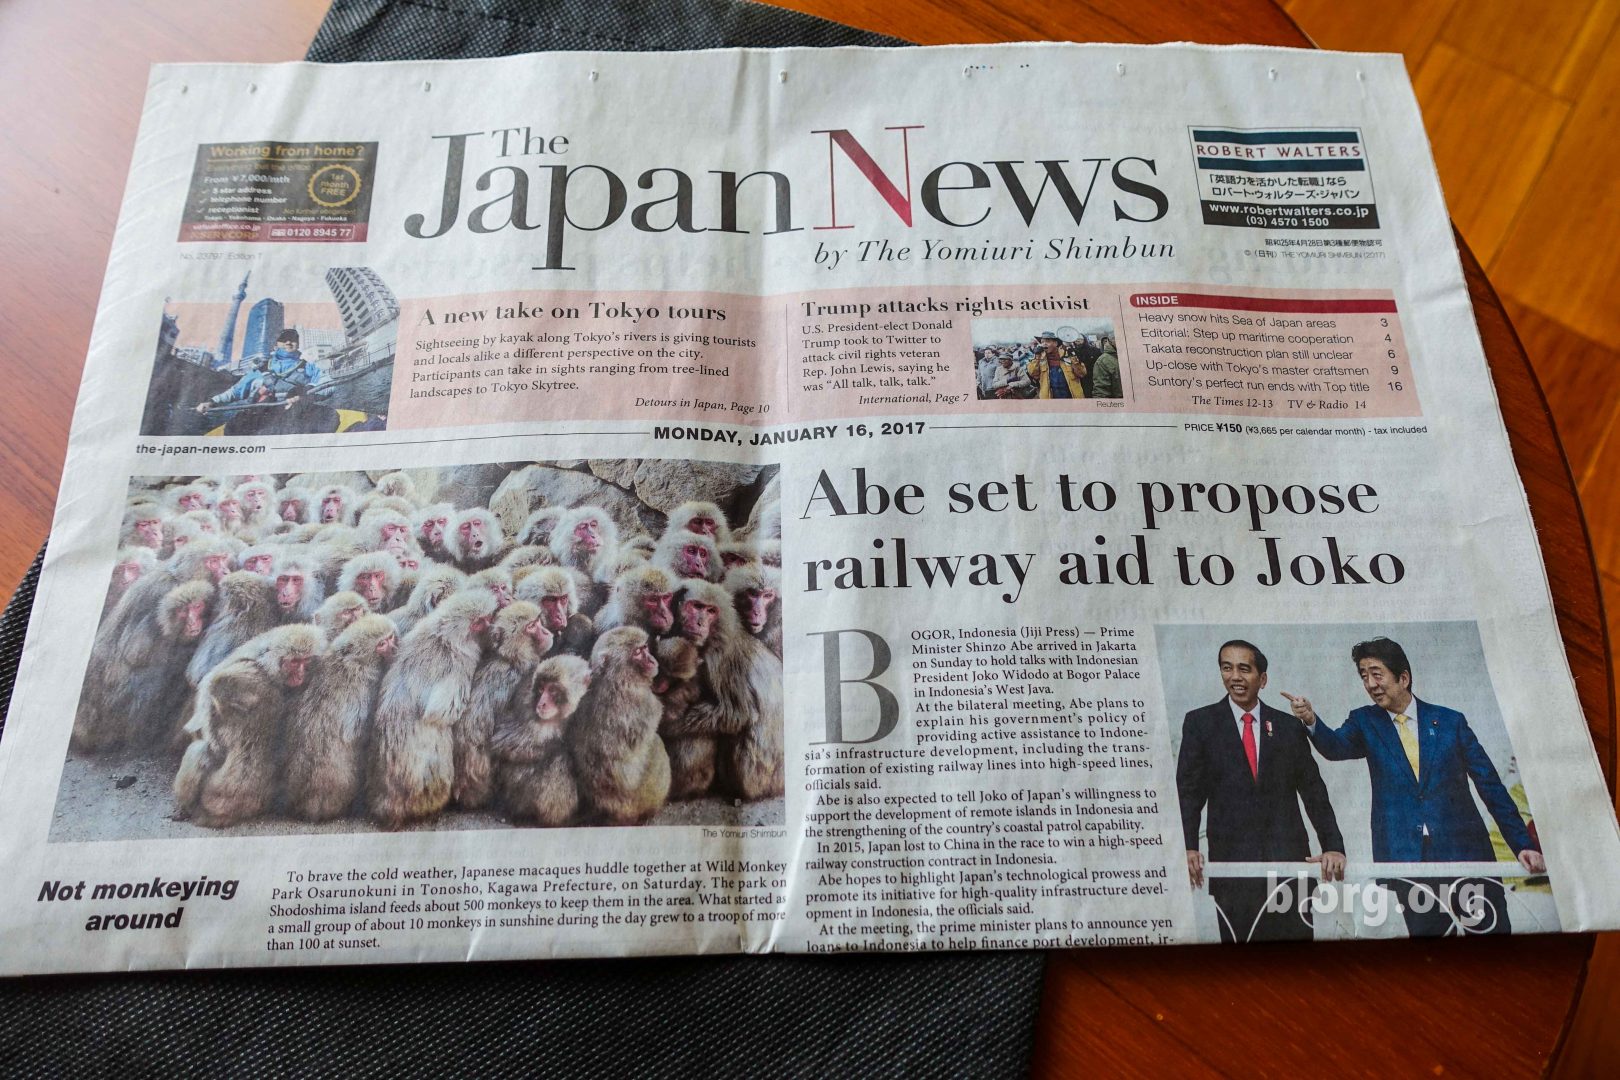 japanese newspaper